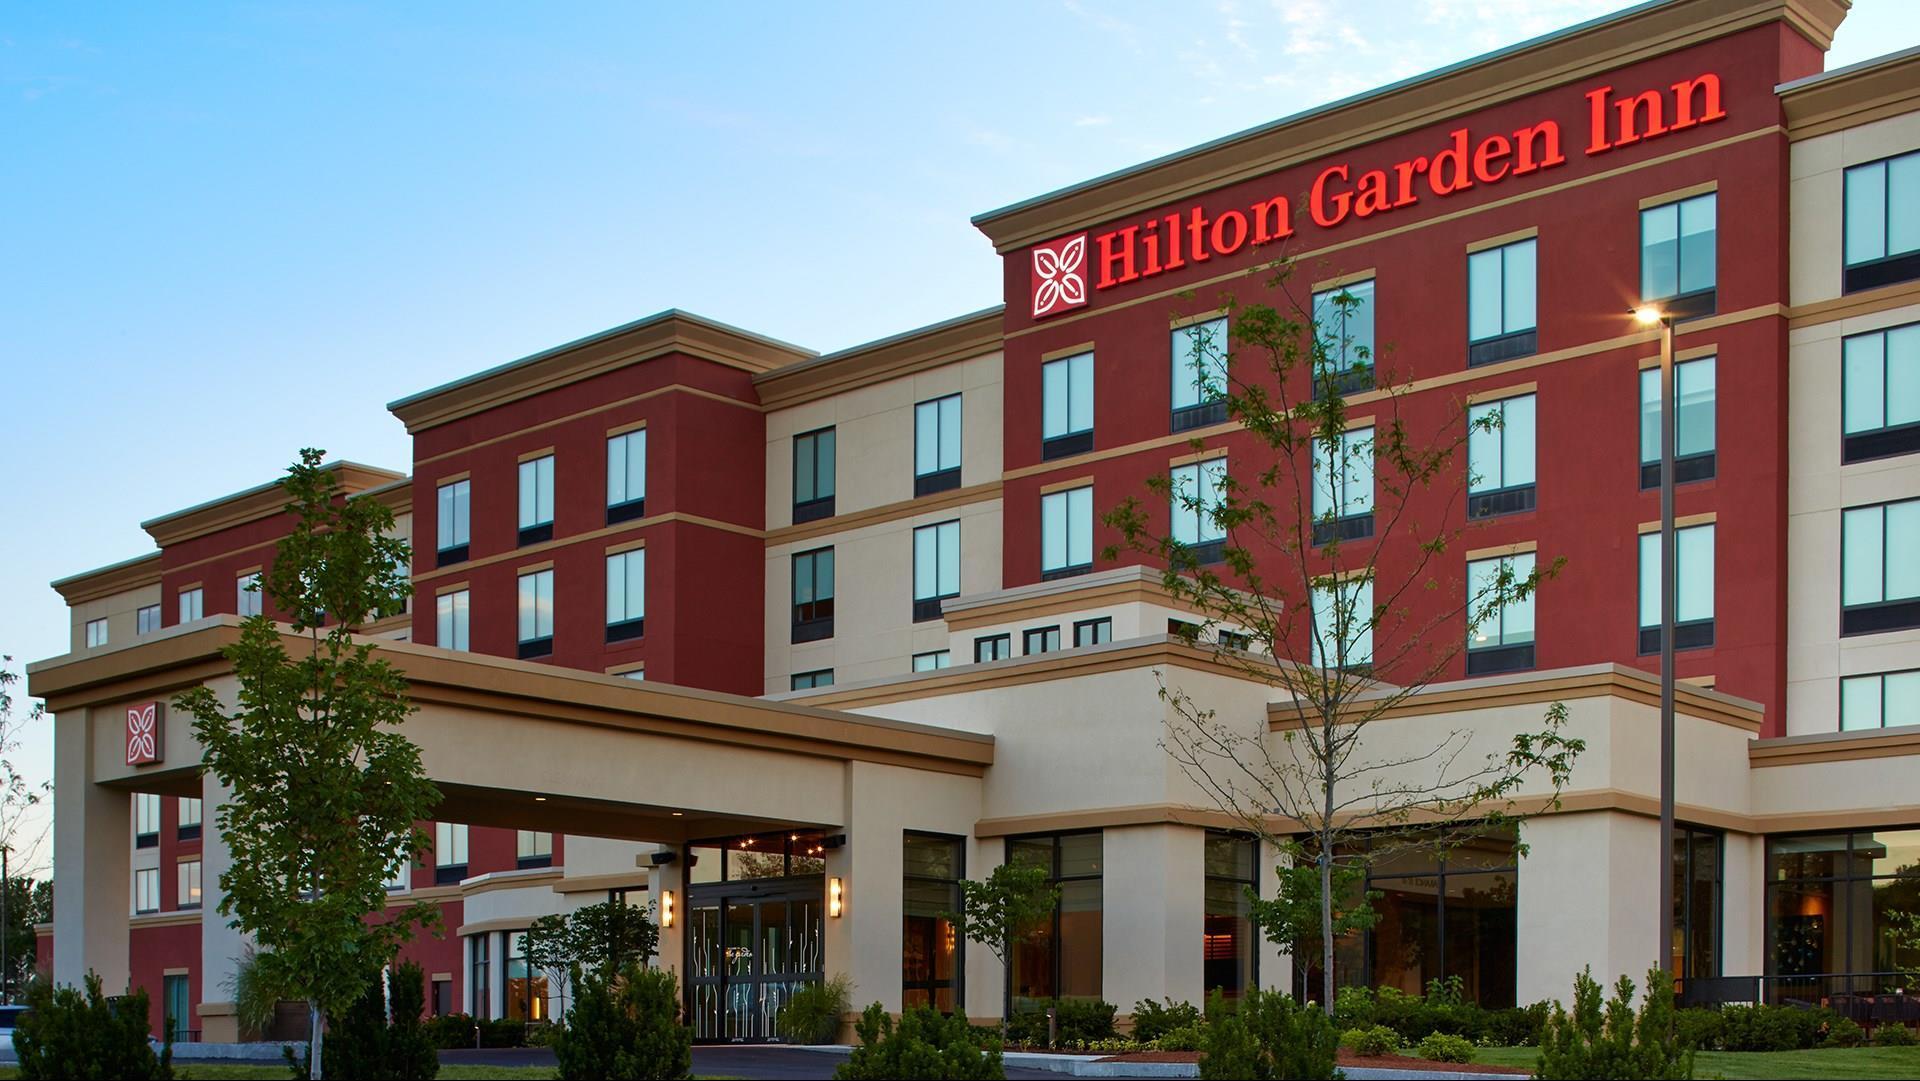 Hilton Garden Inn Boston/Marlborough in Marlborough, MA